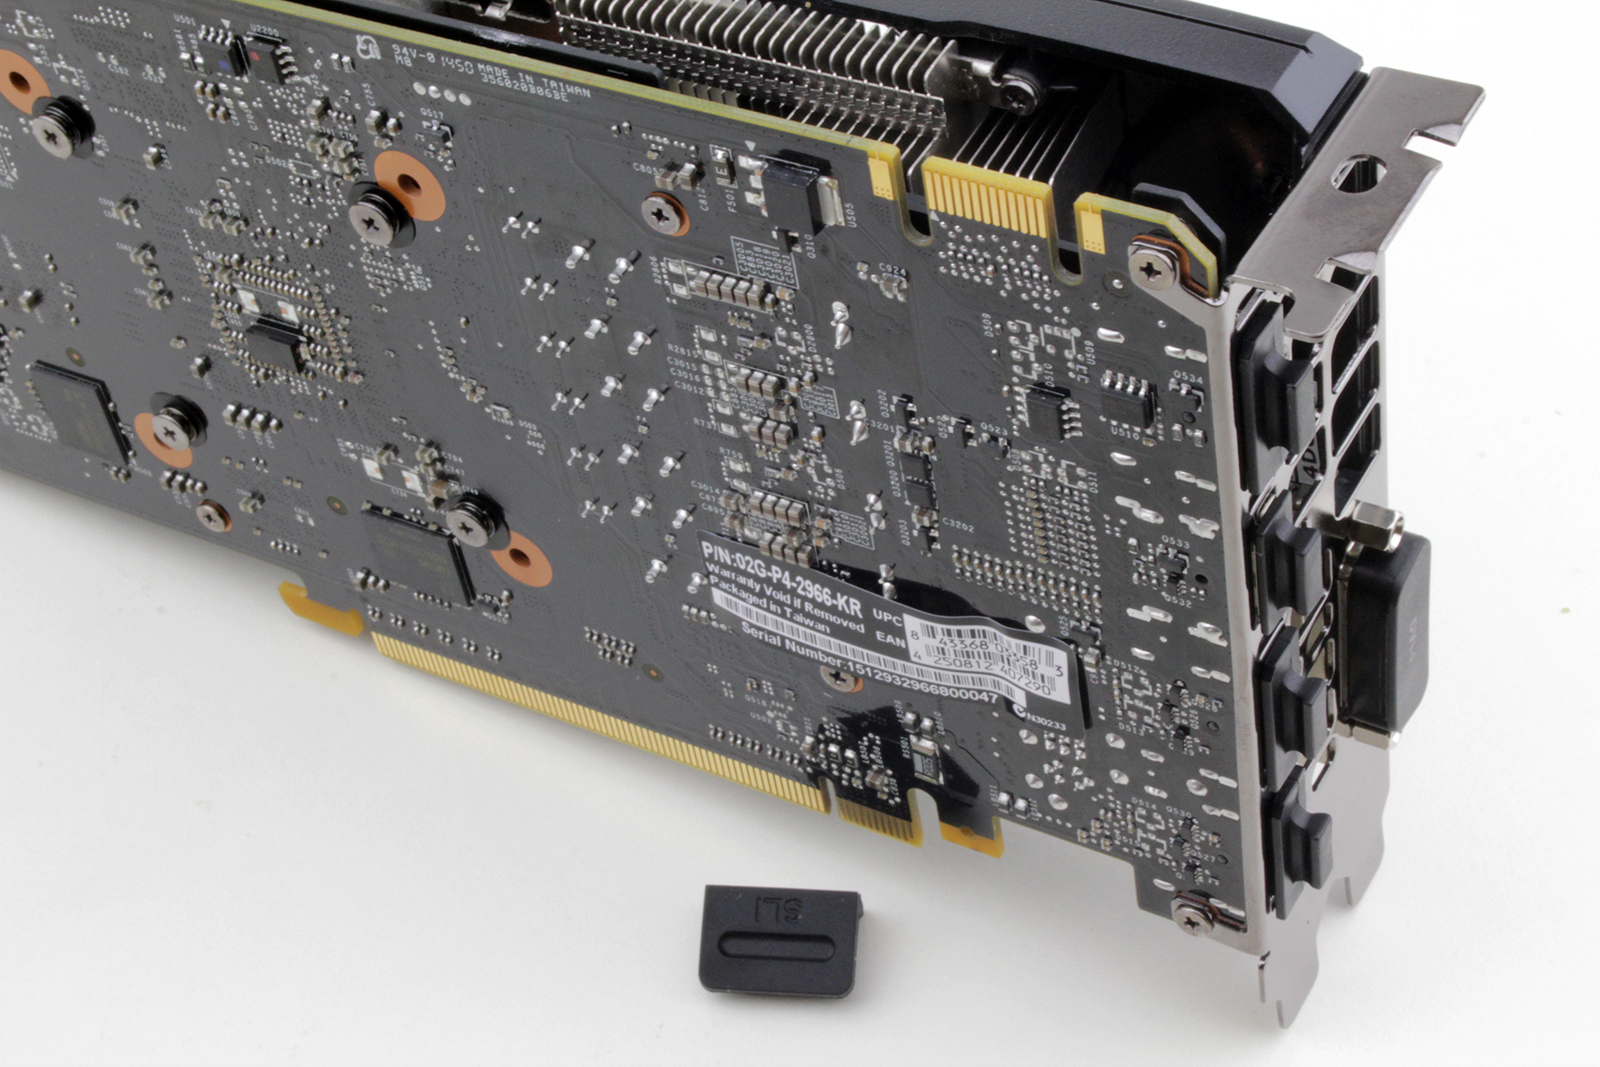 Evga Geforce Gtx 960 Supersc Acx 2 0 Reviewed